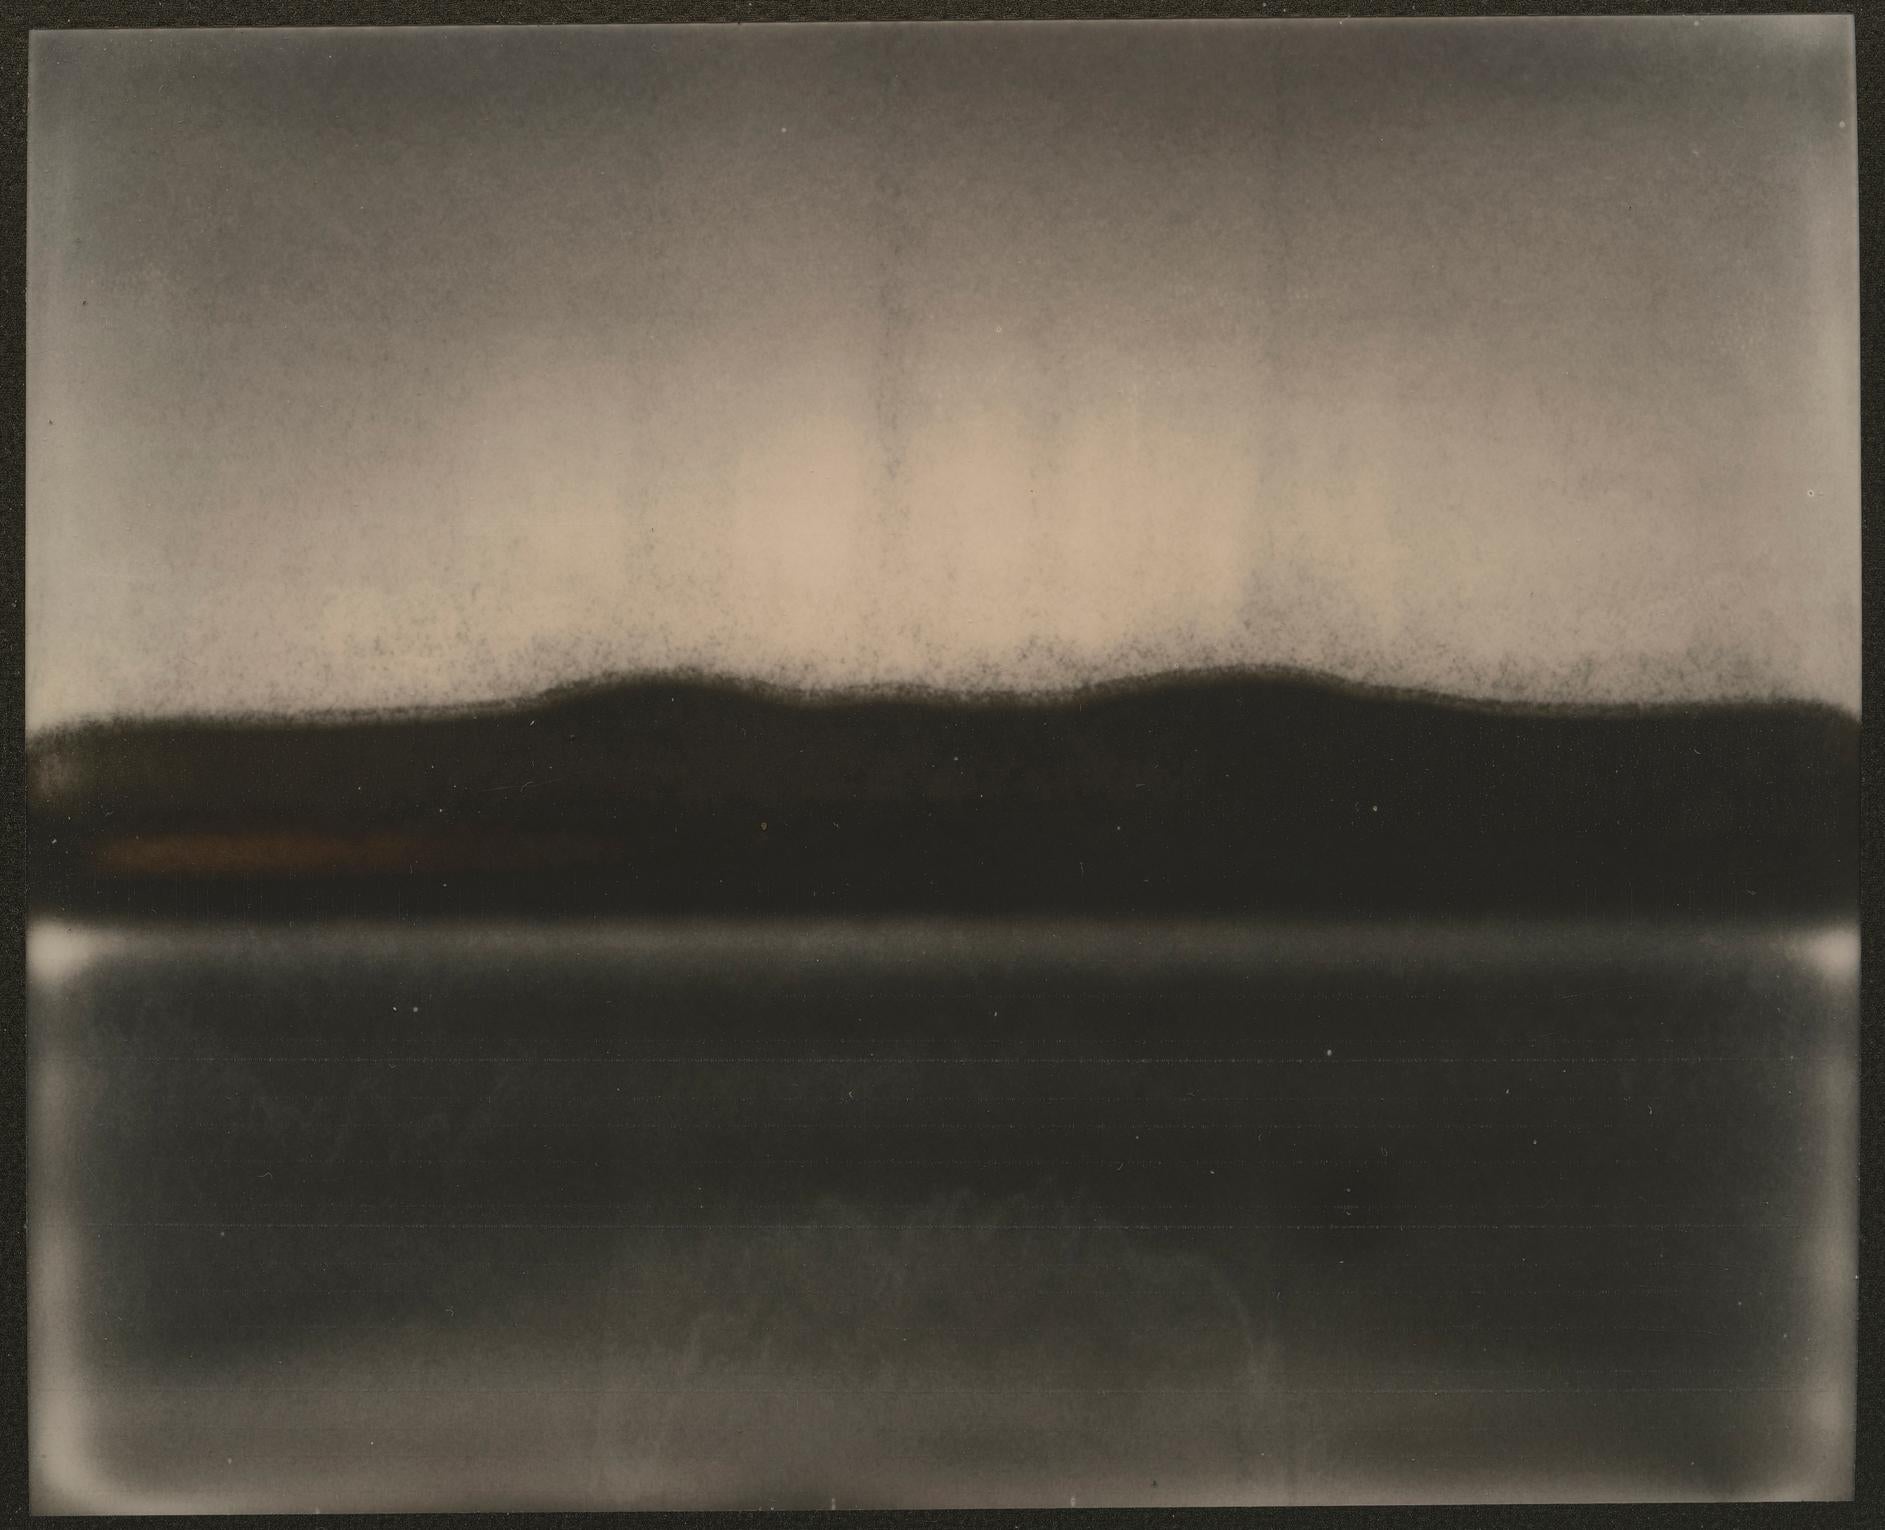 Stefanie Schneider Landscape Photograph - Illuminated (Deconstructivism) - Contemporary, Expired Polaroid